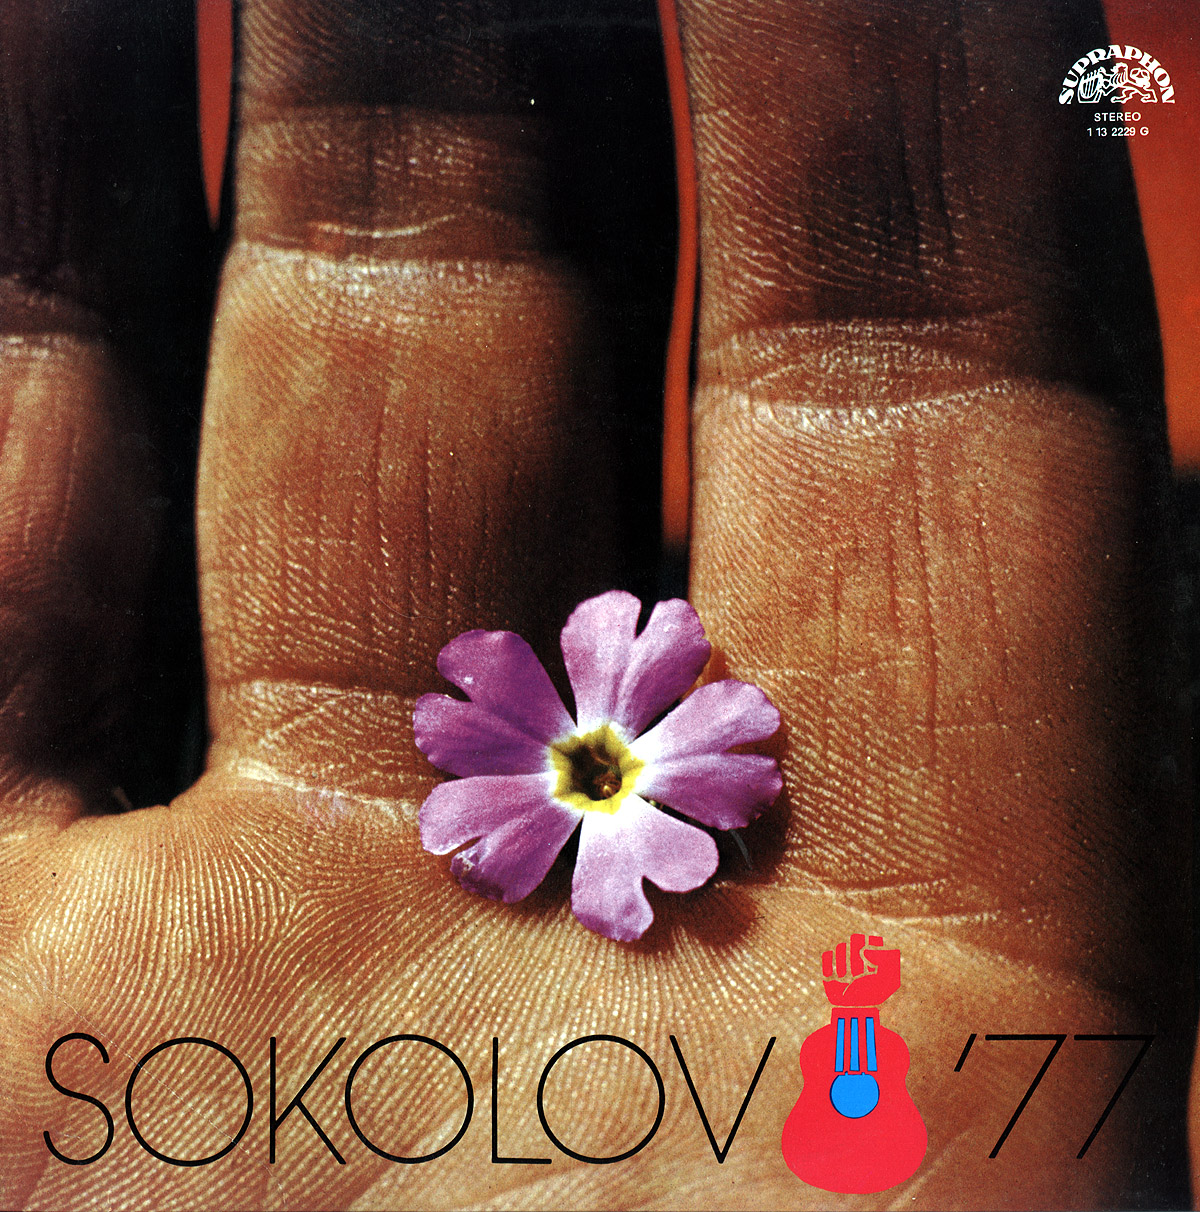 SOKOLOV 77 